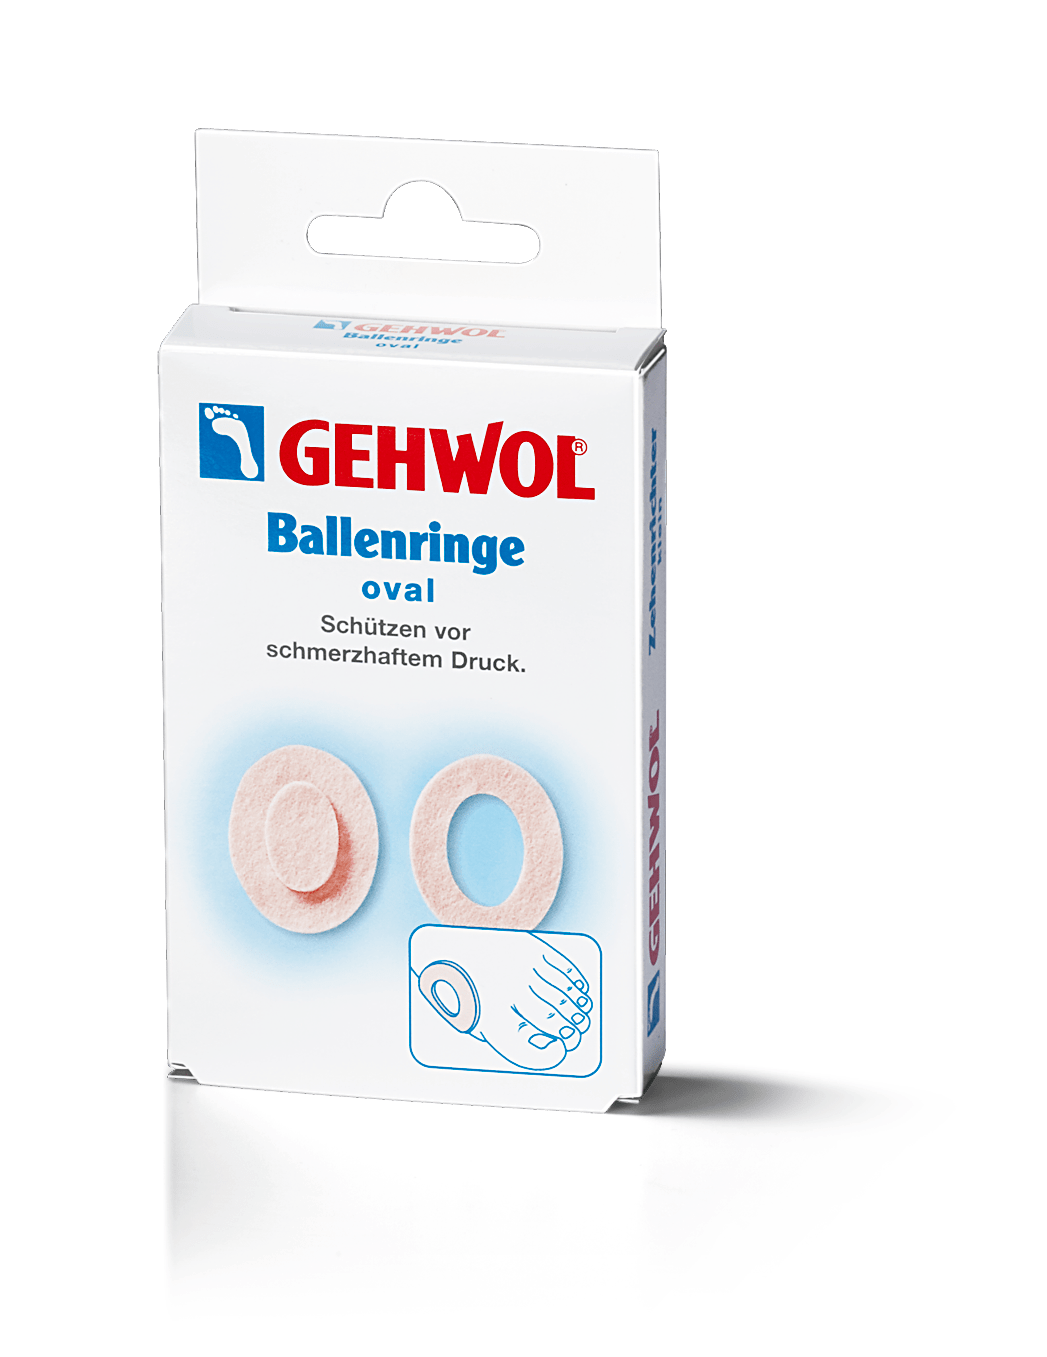 GEHWOL - Ballenringe